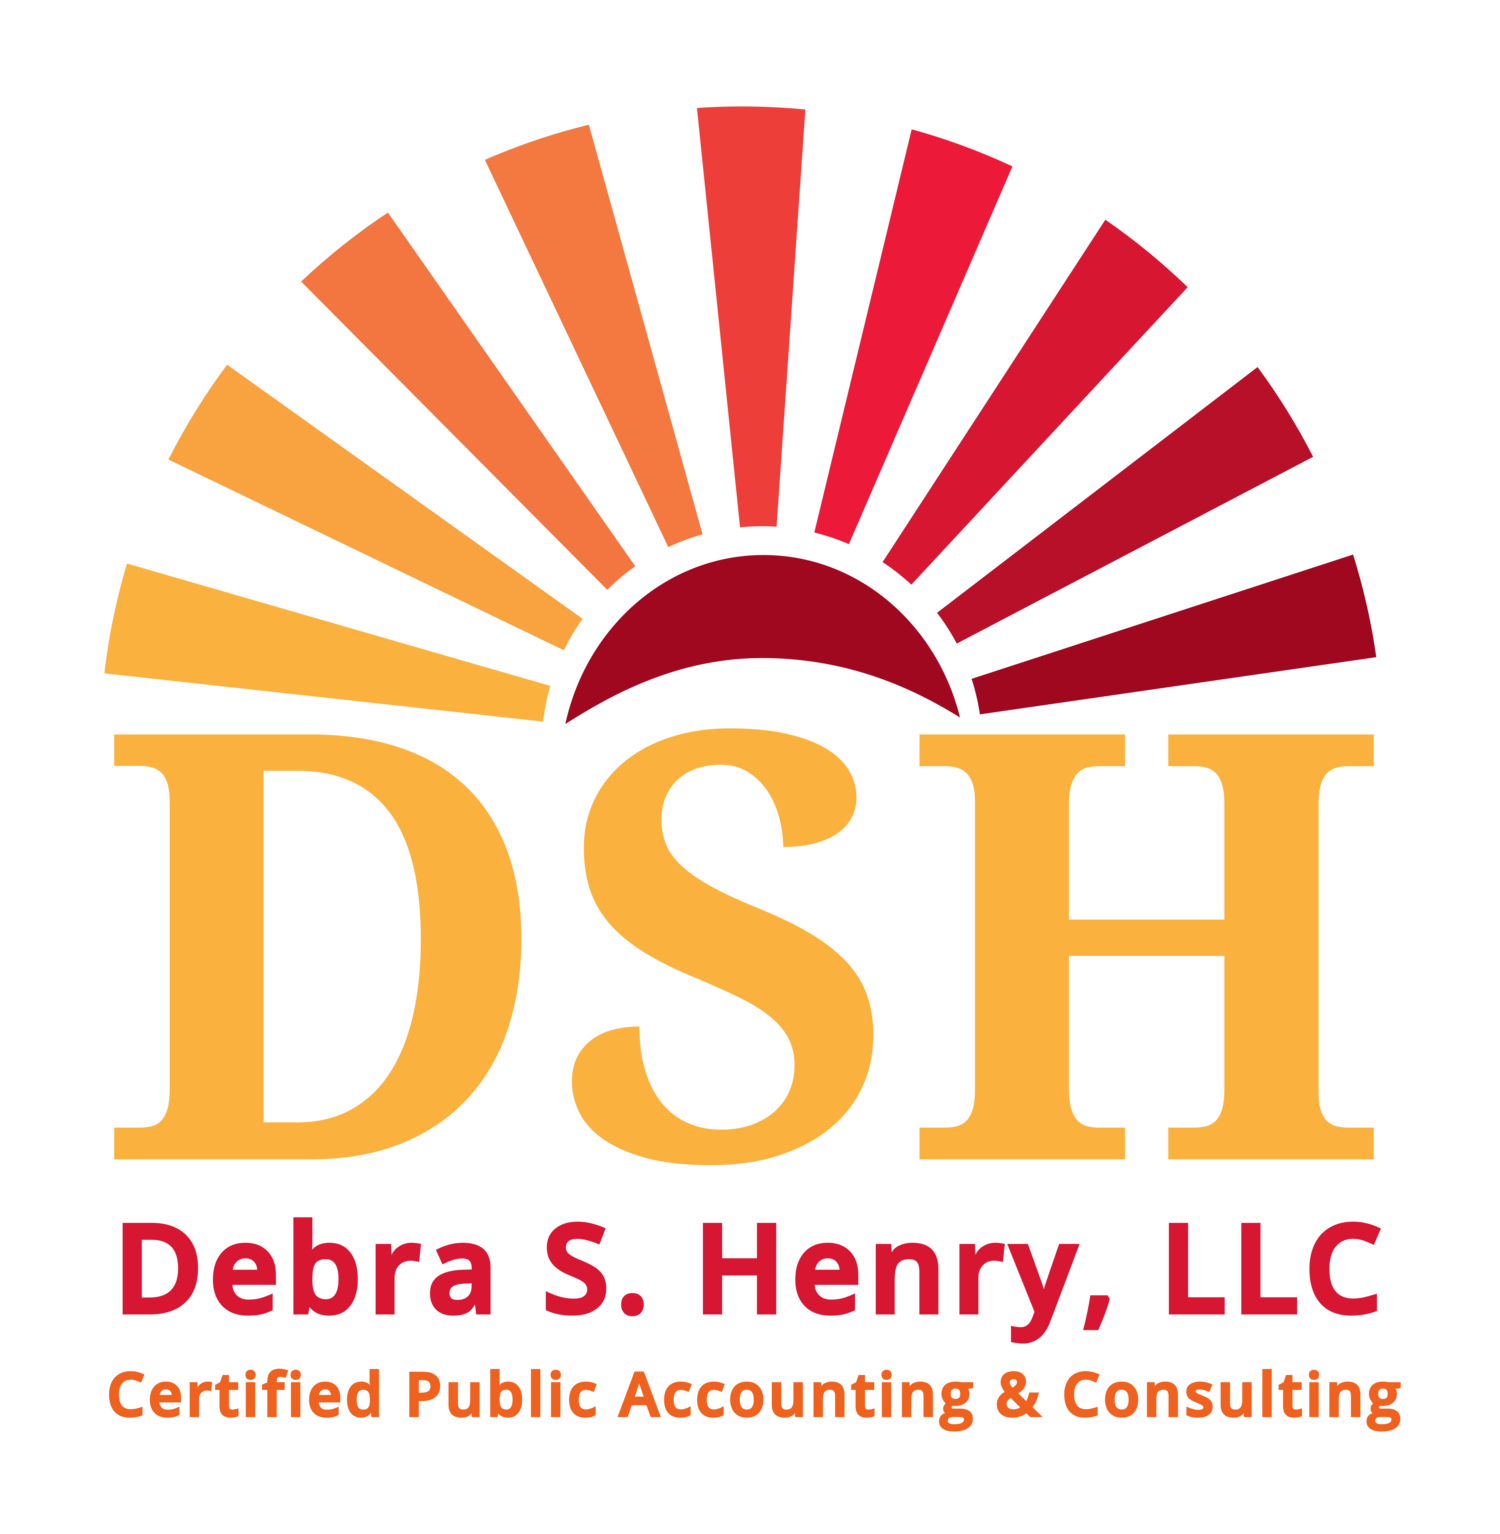 Debra S. Henry, CPA